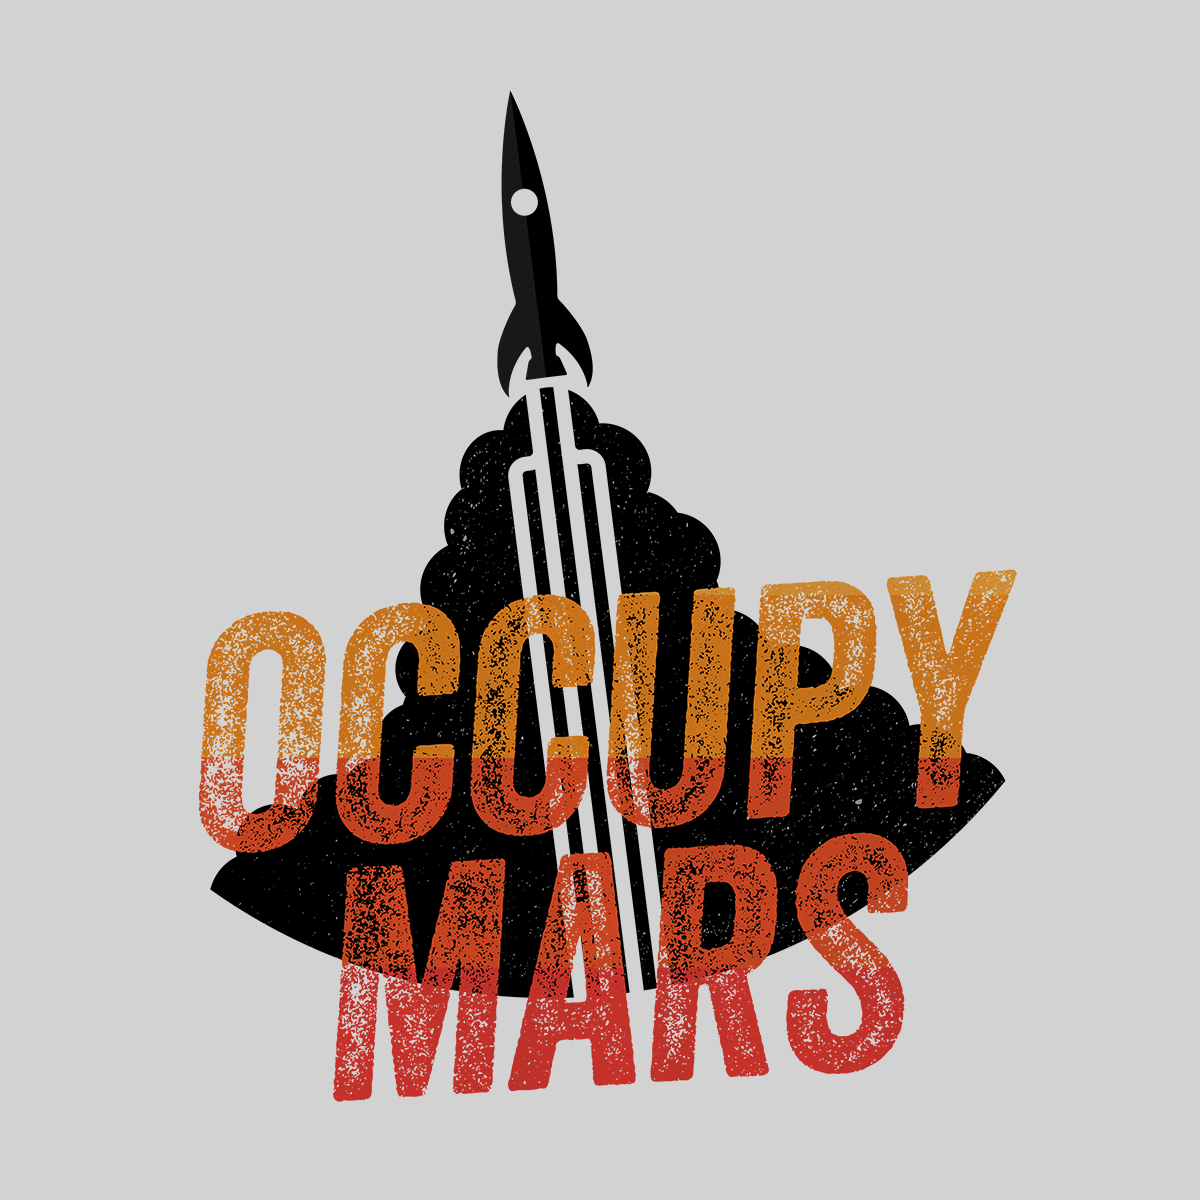 Occupy Mars Space Nasa Project SpaceX Rocket Stars Crew Neck T Shirt - Kuzi Tees